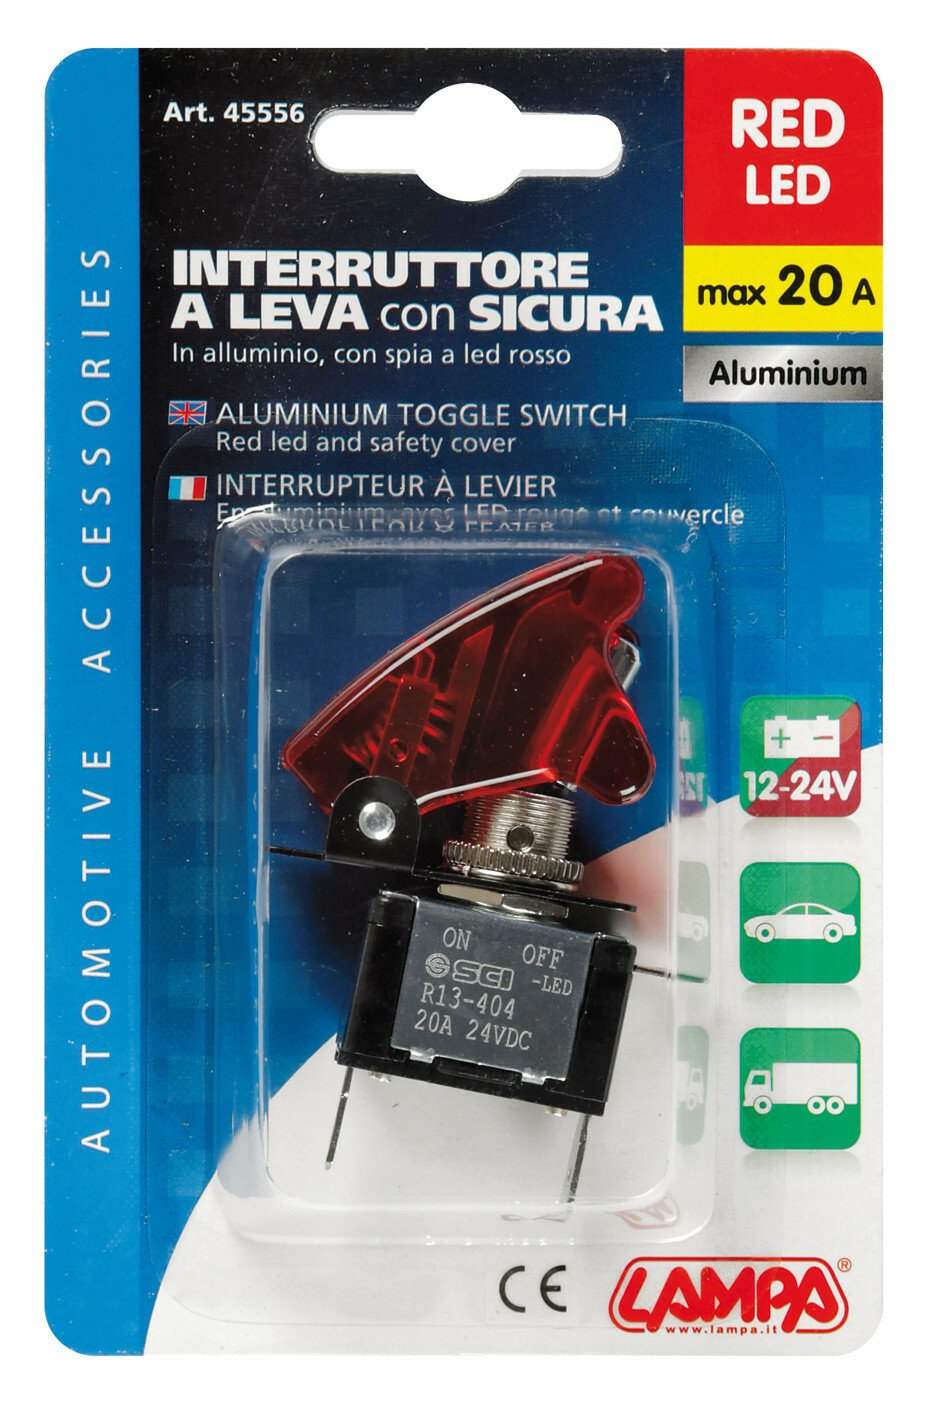 Aluminium toggle switch - Red thumb